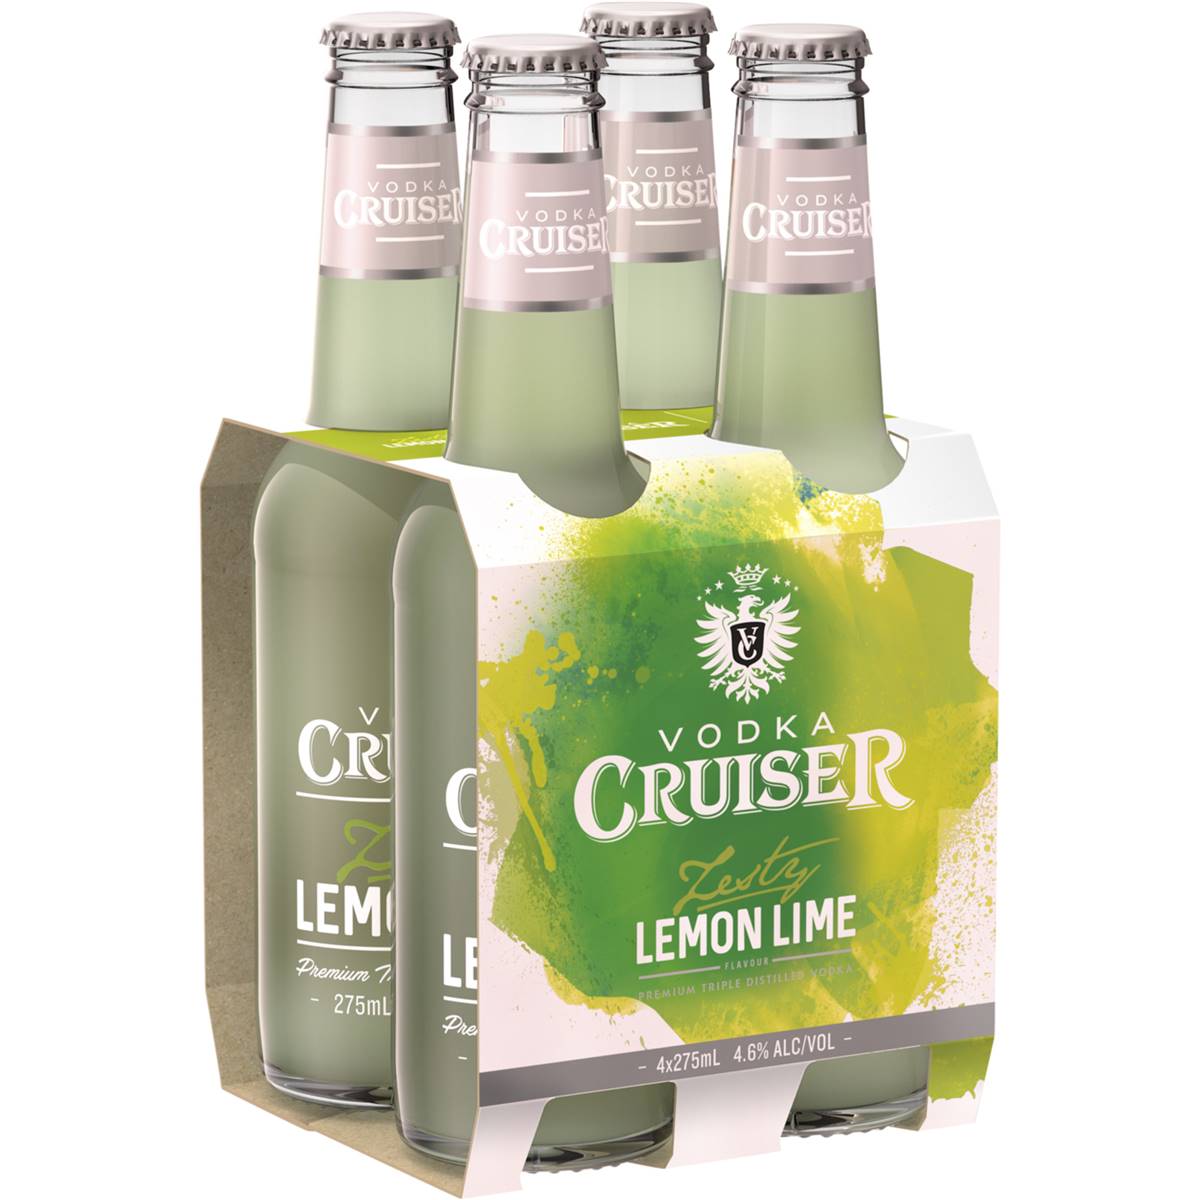 Calories in Vodka Cruiser Zesty Lemon Lime